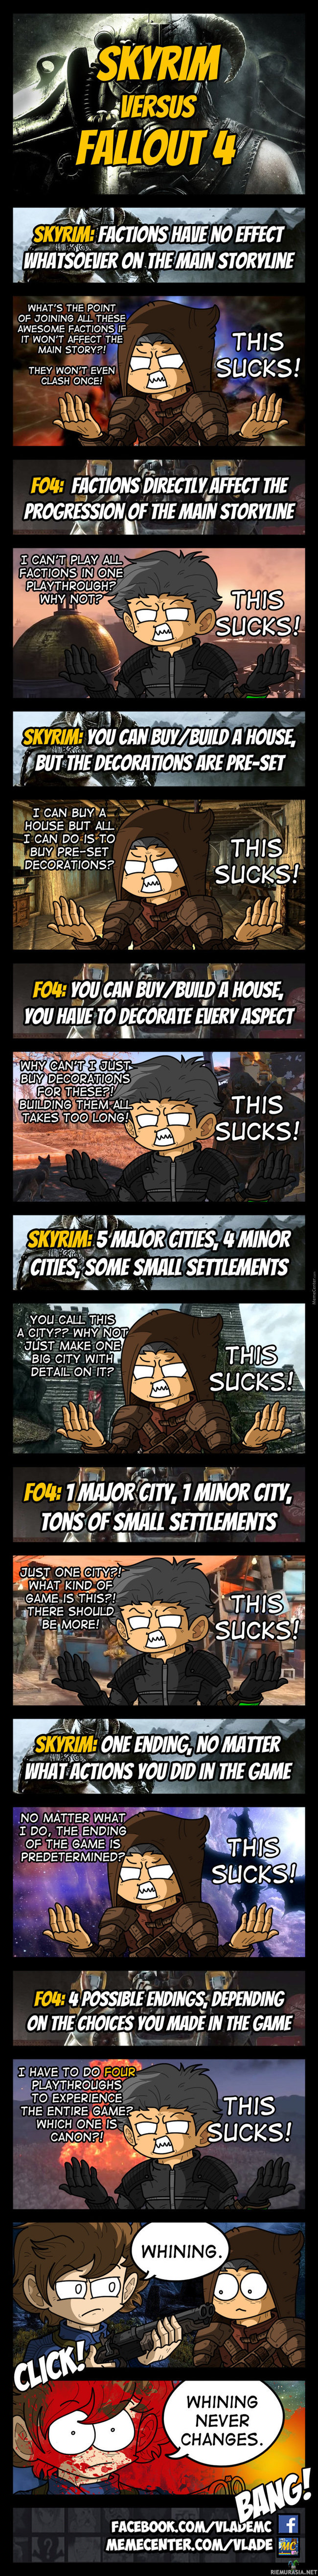 Skyrim VS Fallout